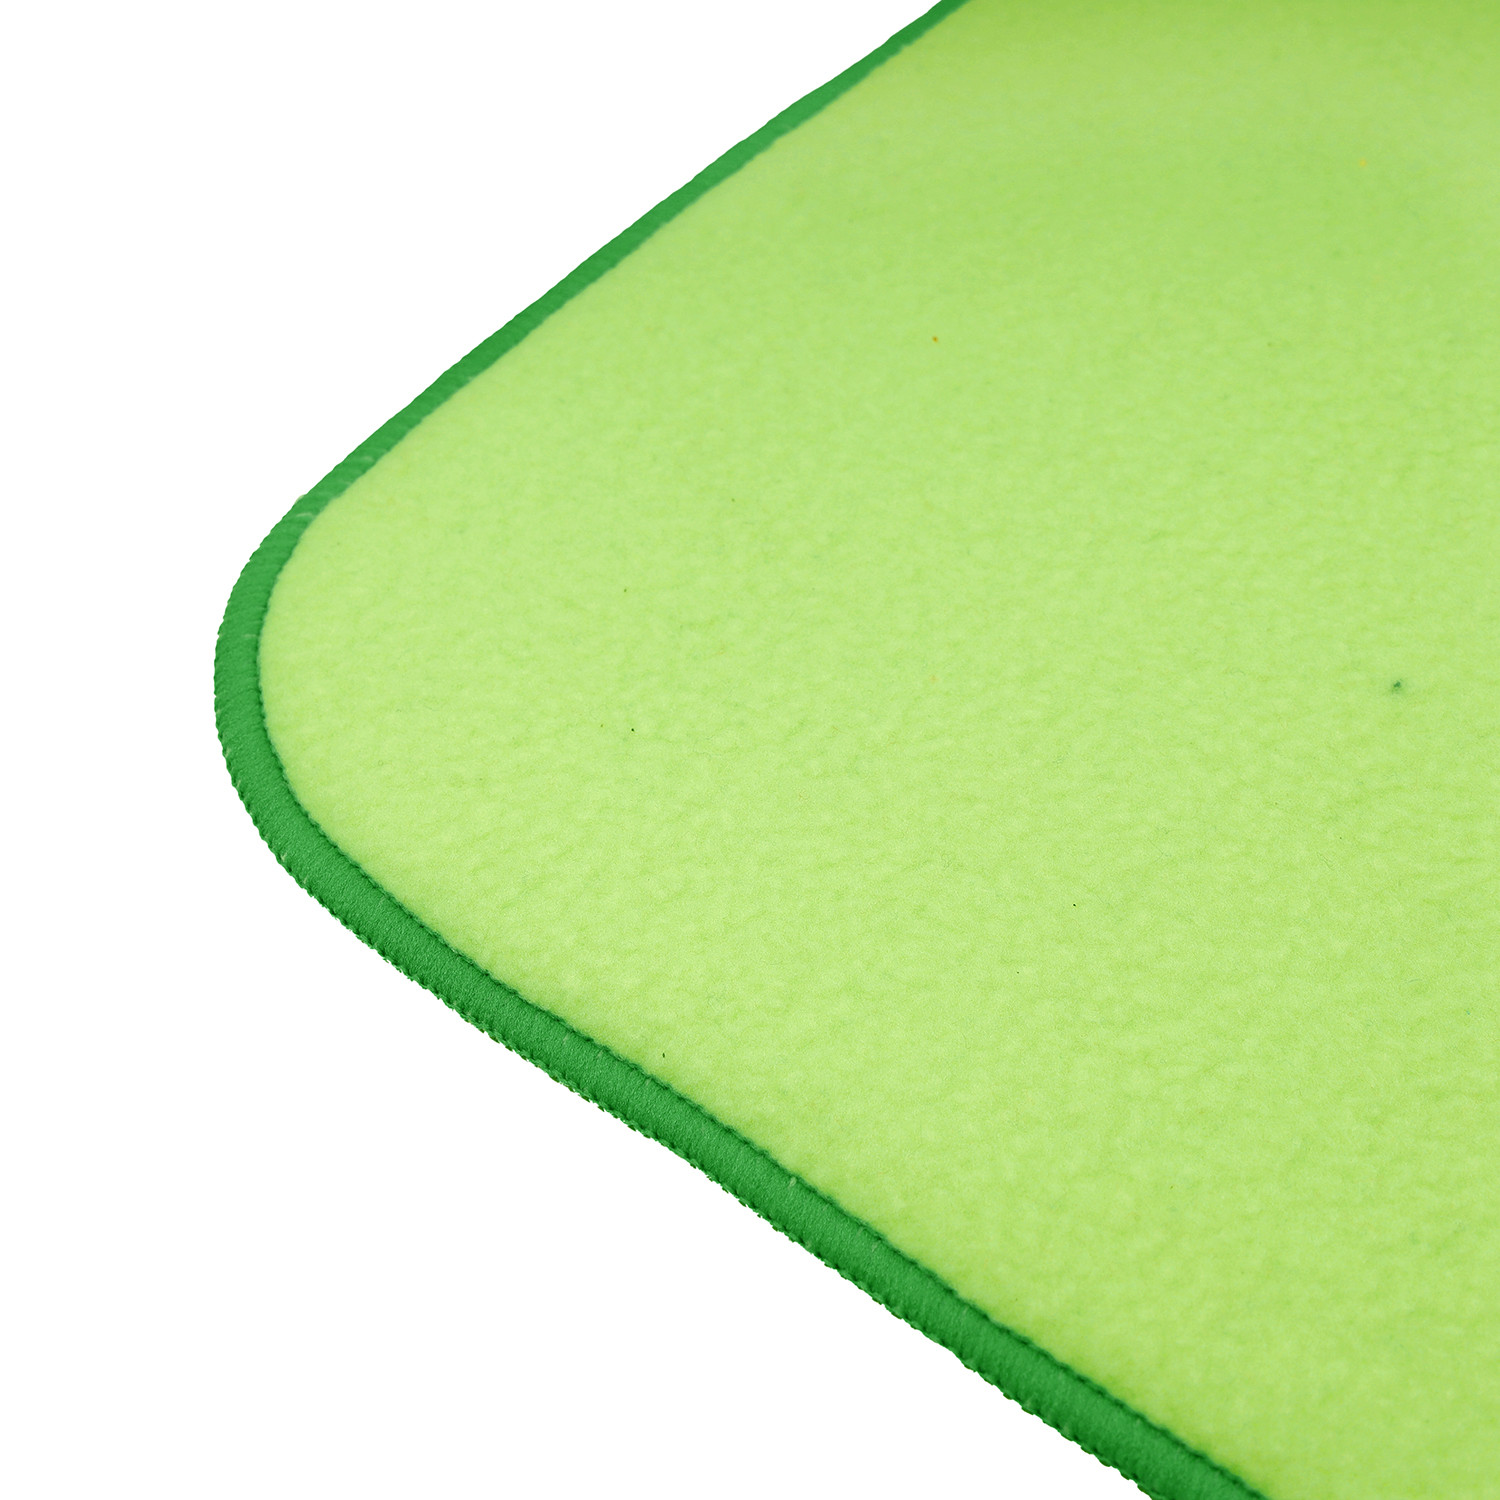 Kuber Industries Dish Dry Mat | Microfiber Drying Mat | Reversible Kitchen Drying Mat | Absorbent Mat | Kitchen Dish Dry Mat | 38x50 | Pack of 3 | Multi